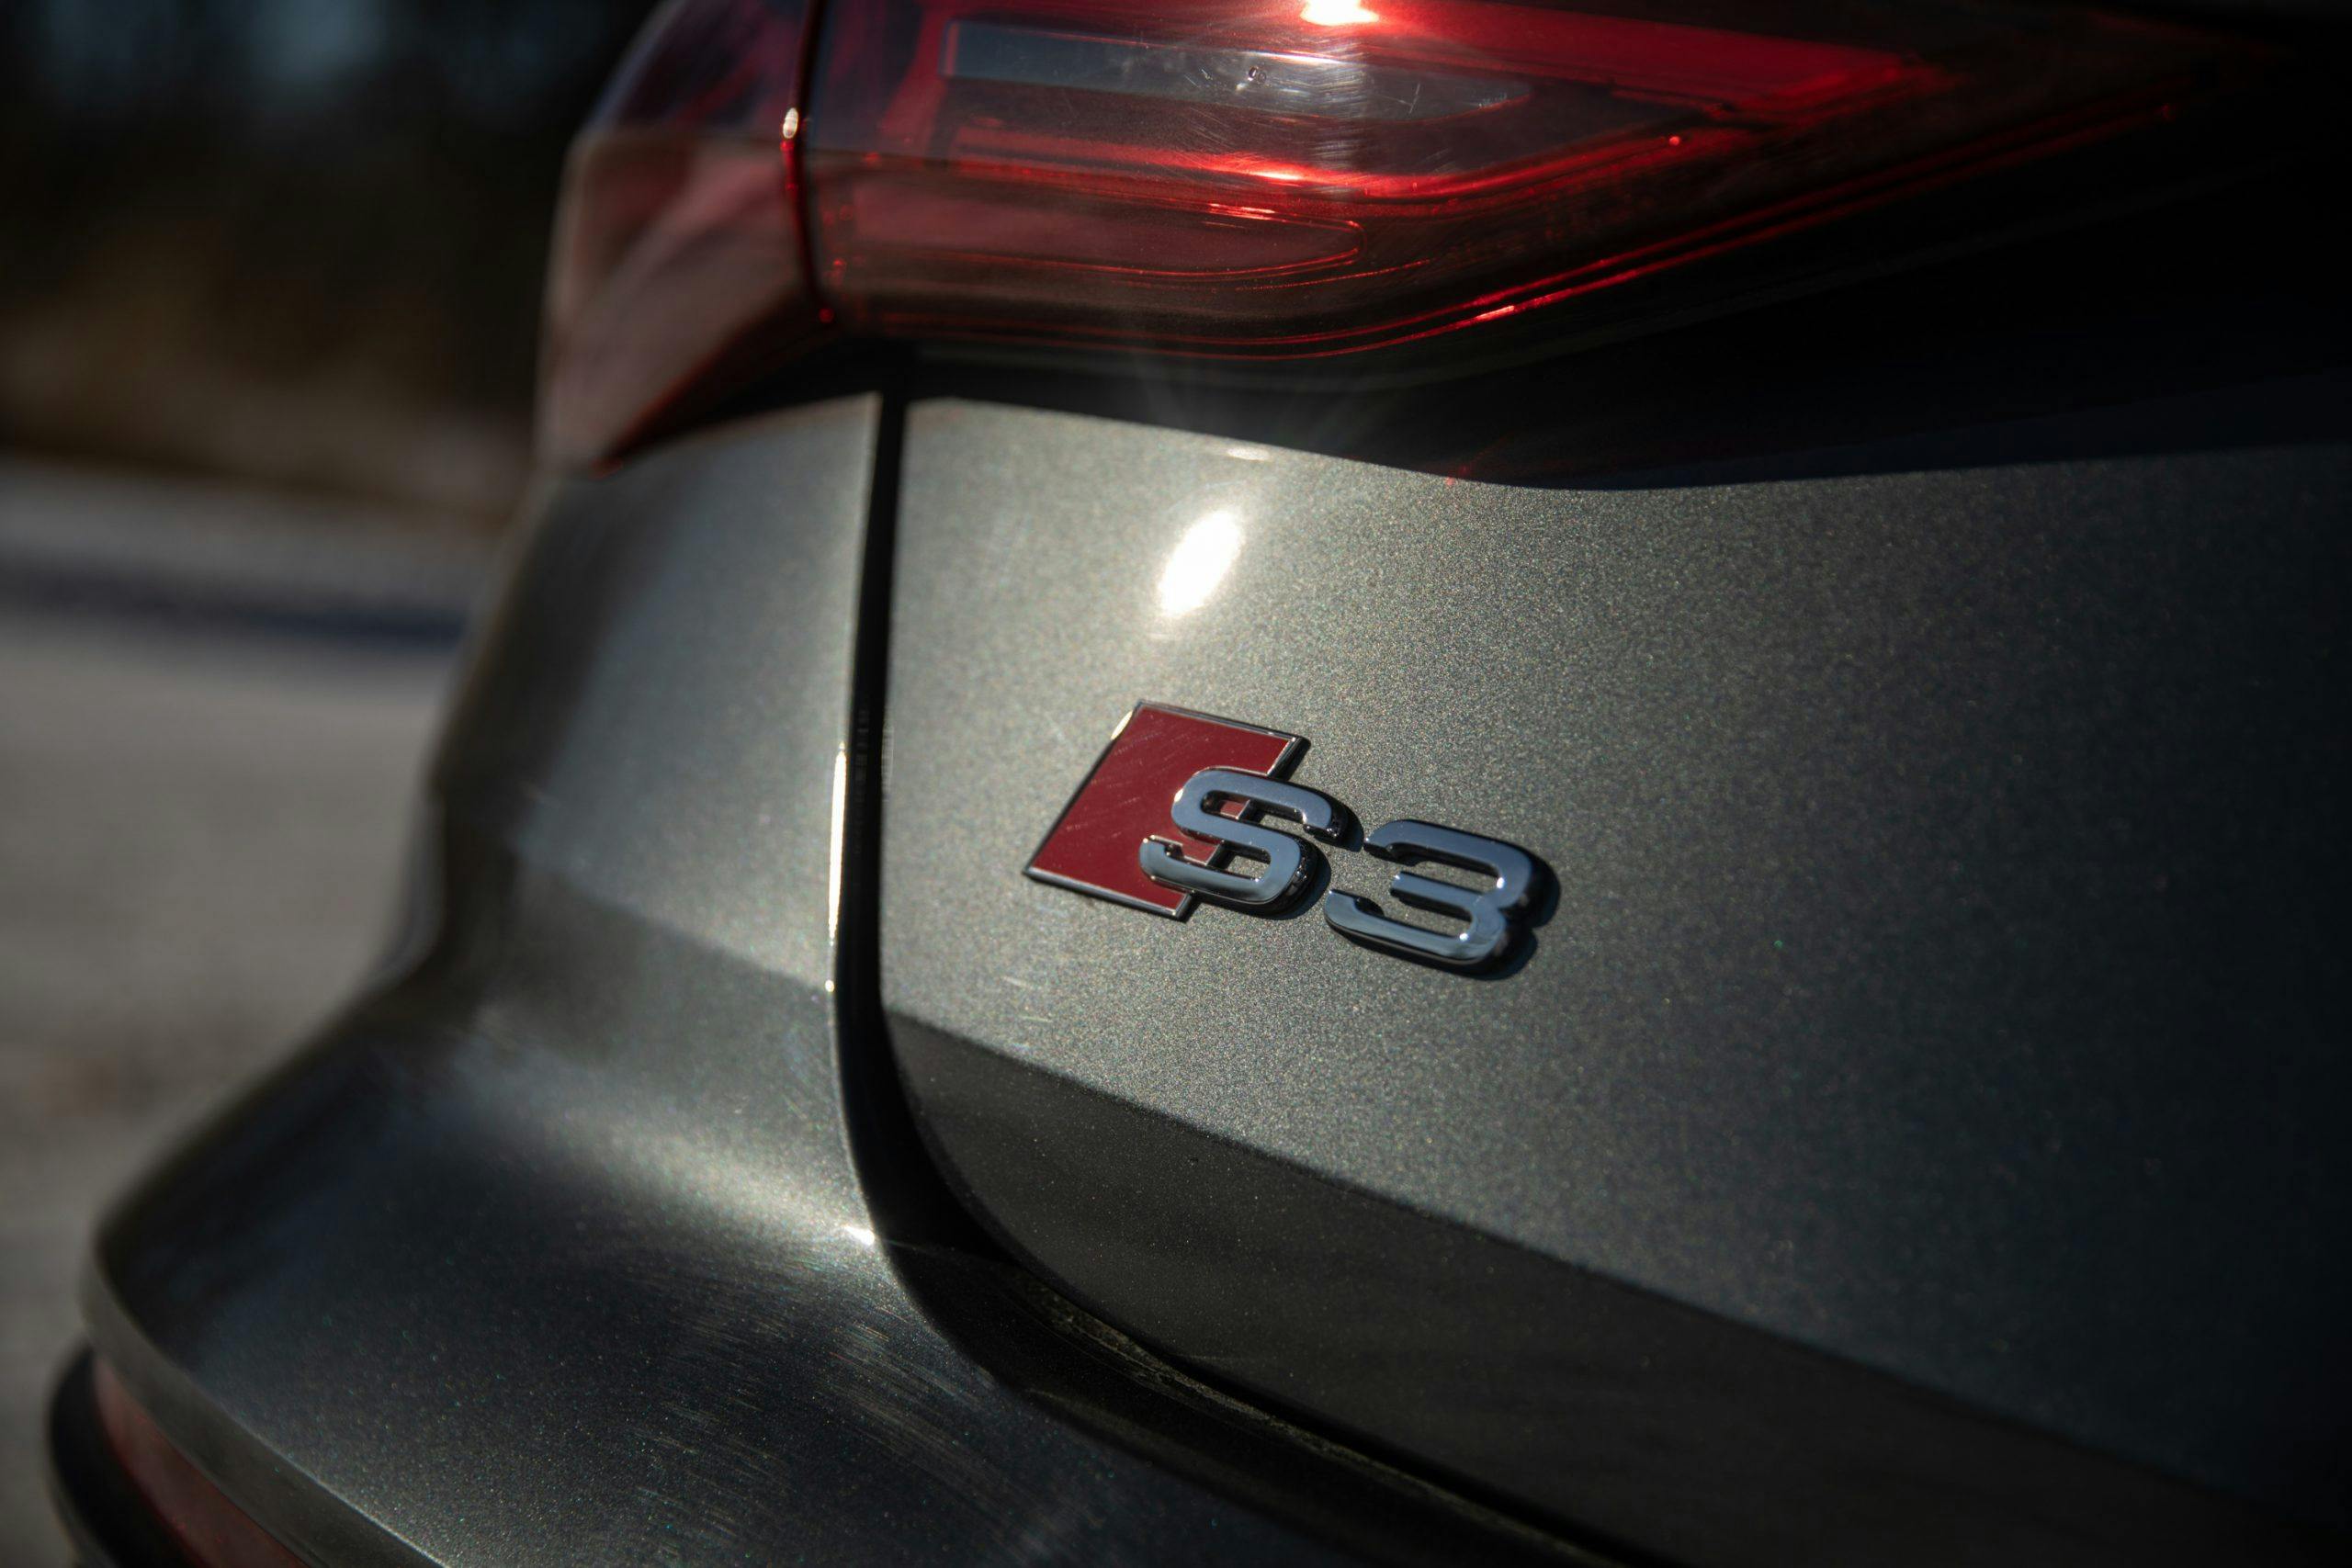 2022 Audi S3 rear badge detail